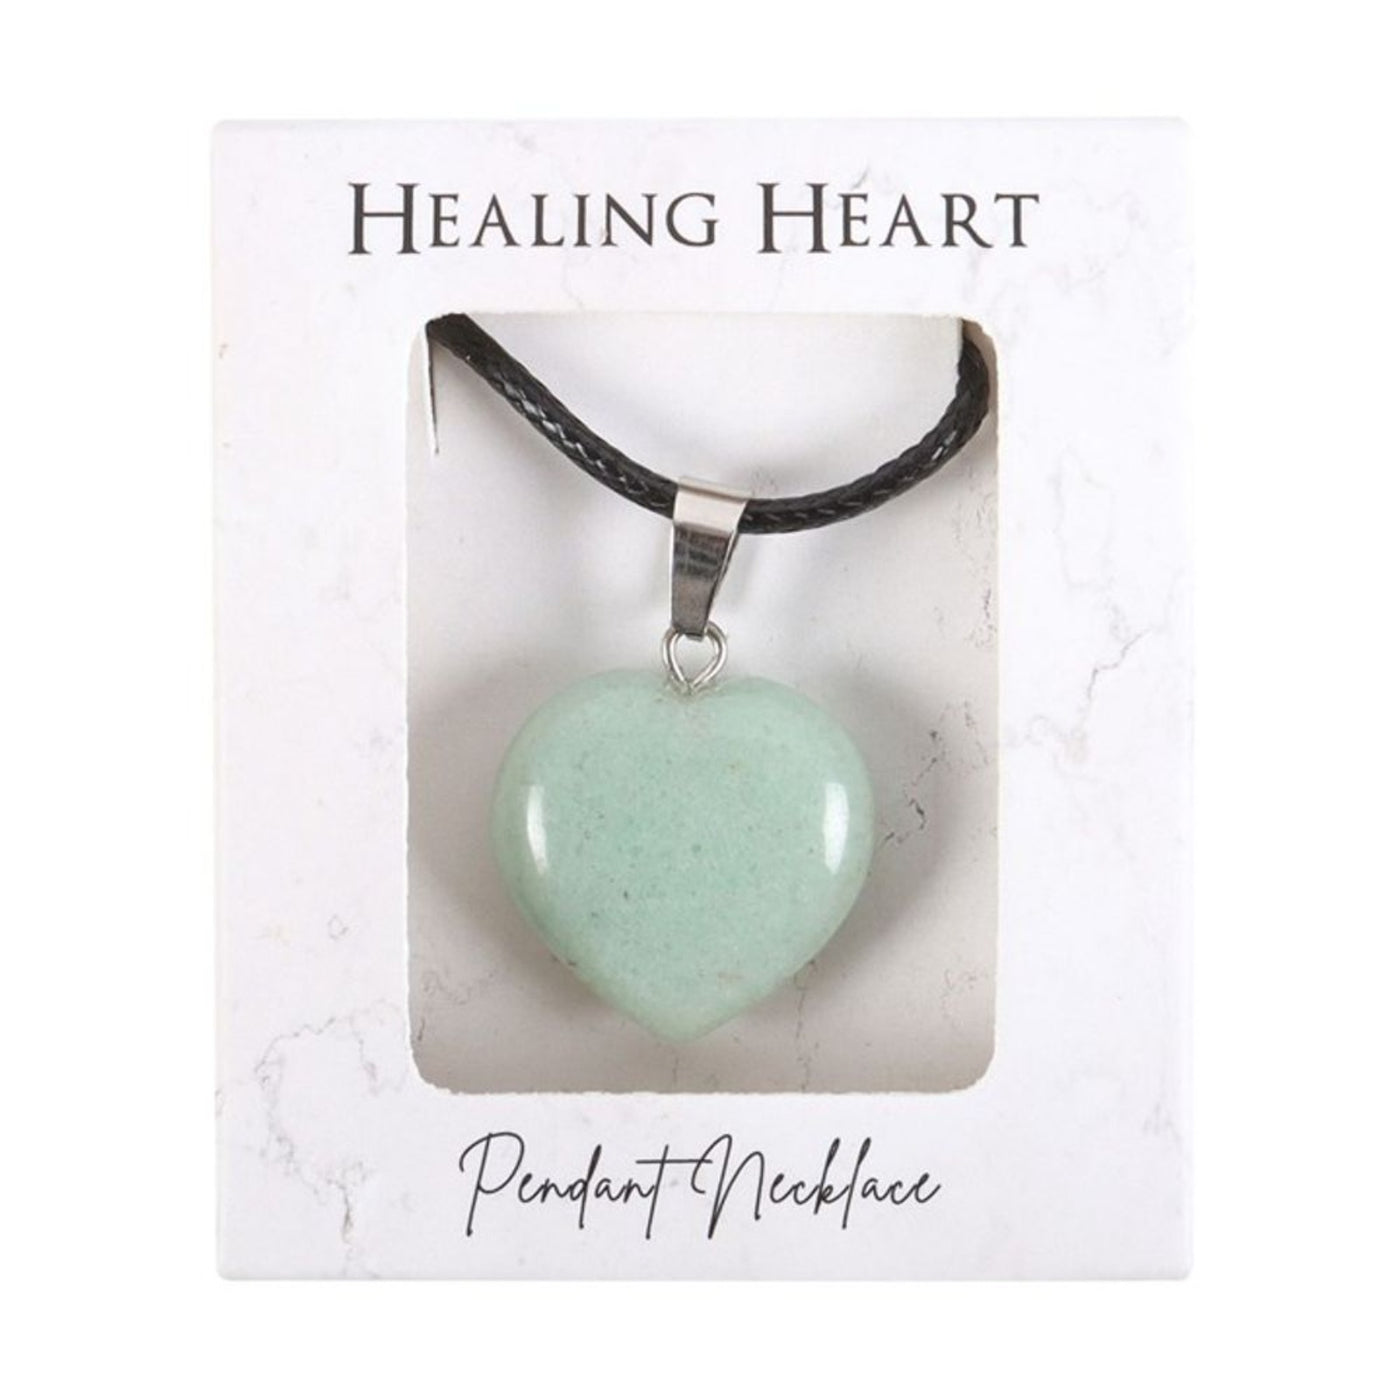 Green Aventurine Heart Shaped Gemstone Necklace.